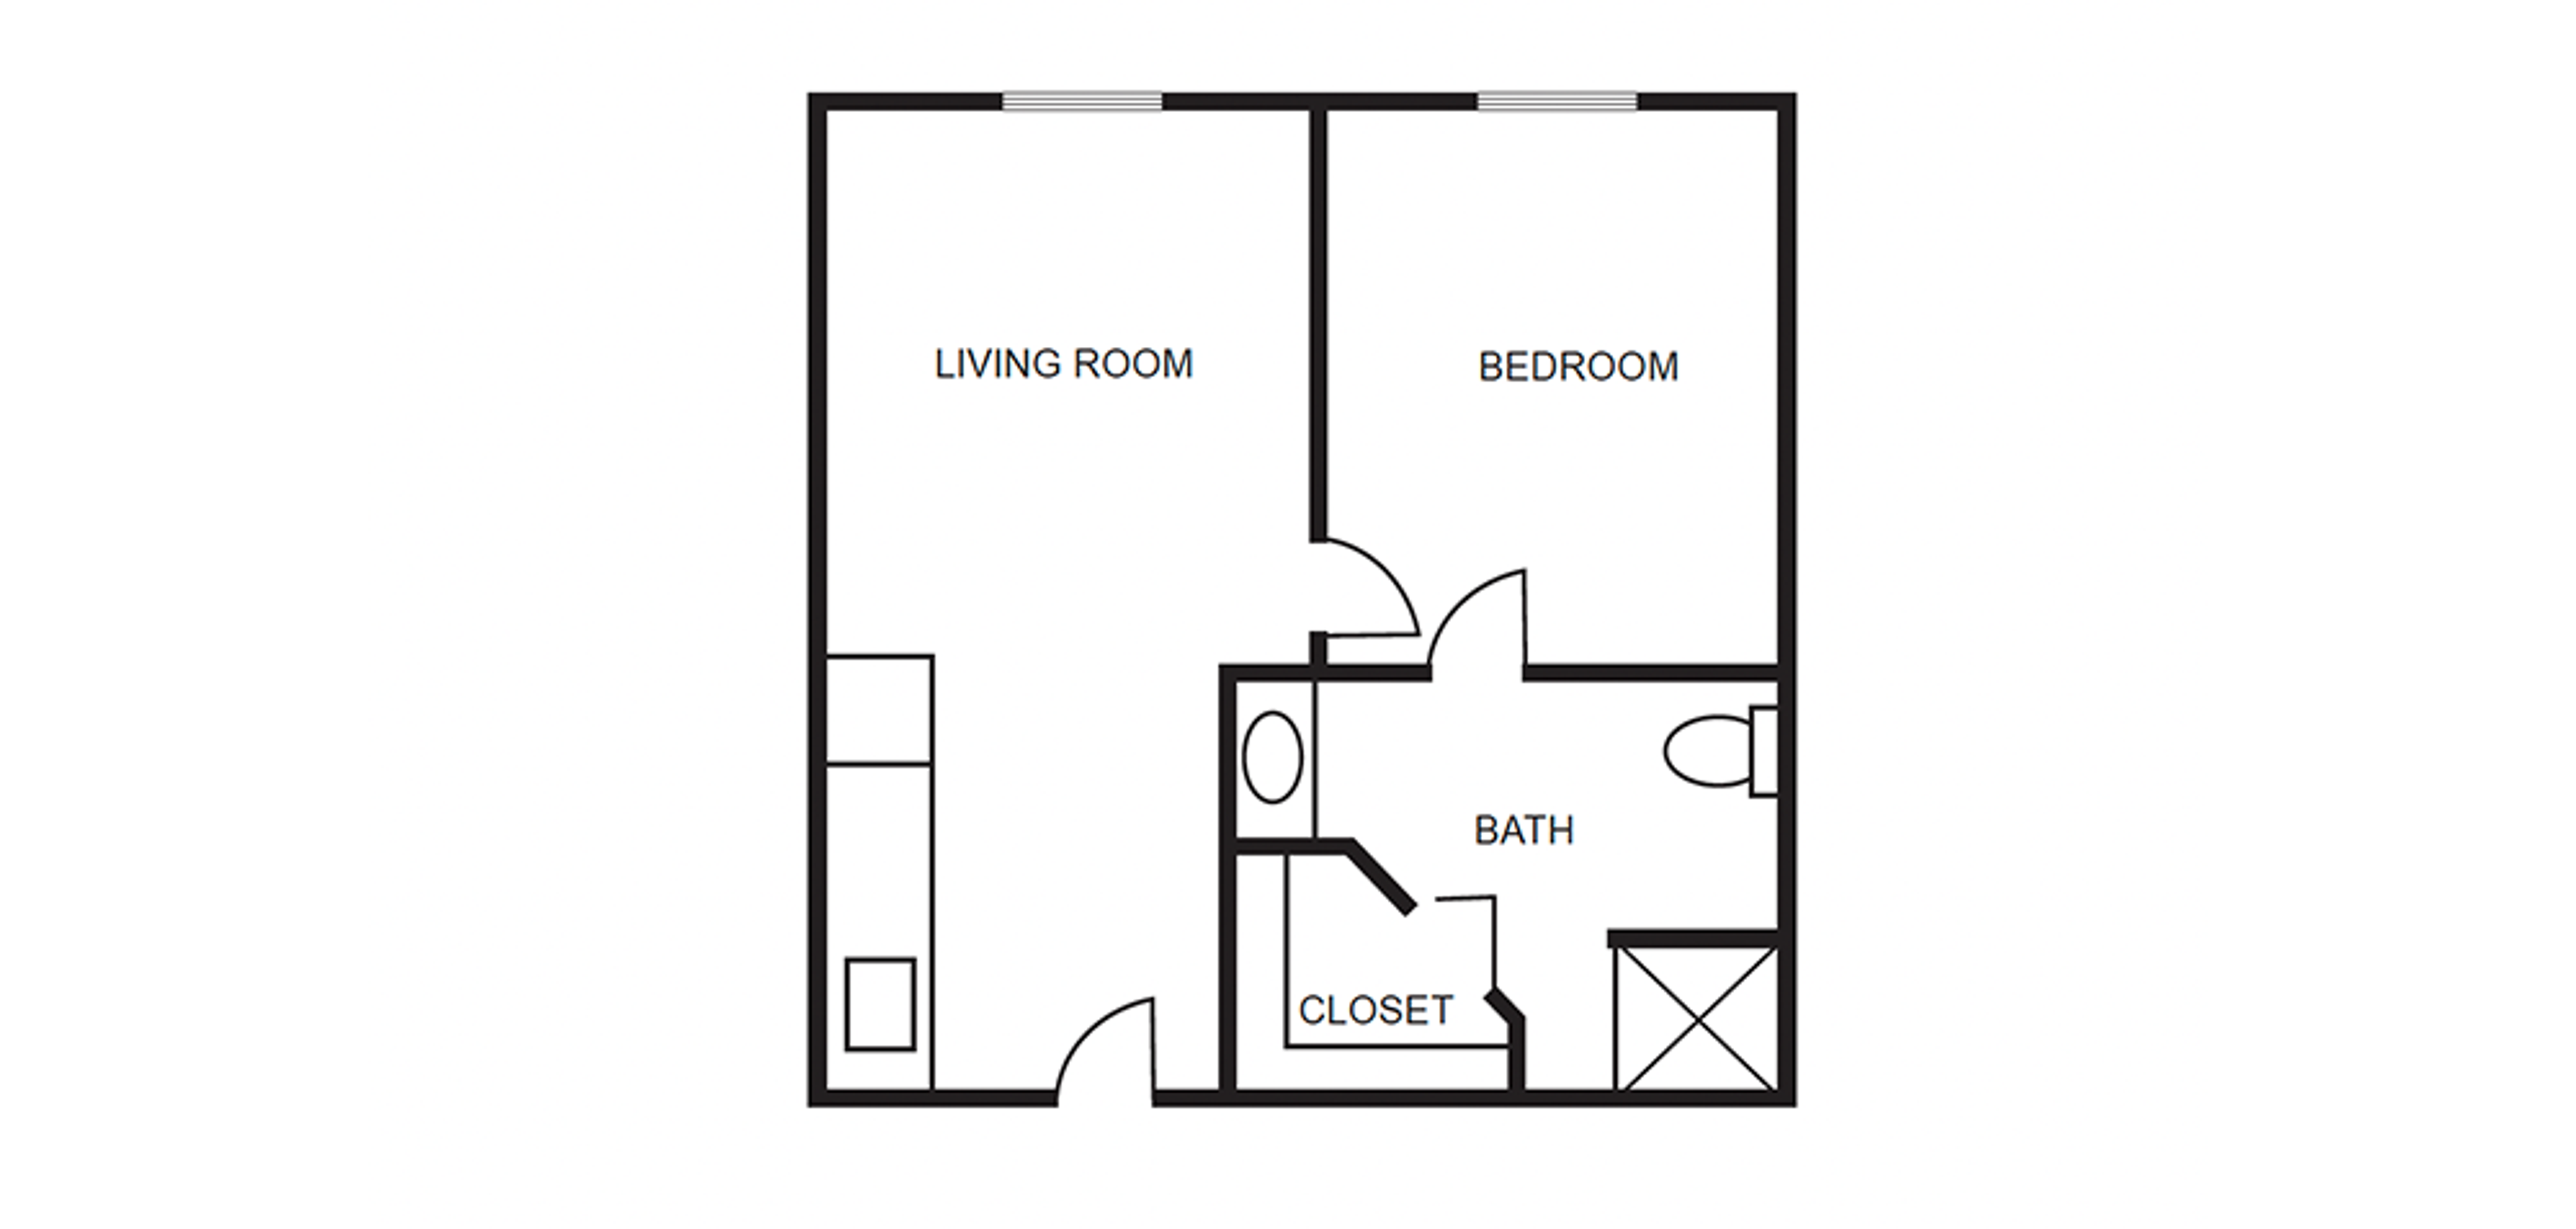 Floor Plans - Crescent Landing at Hattiesburg - Assisted Living One Bedroom